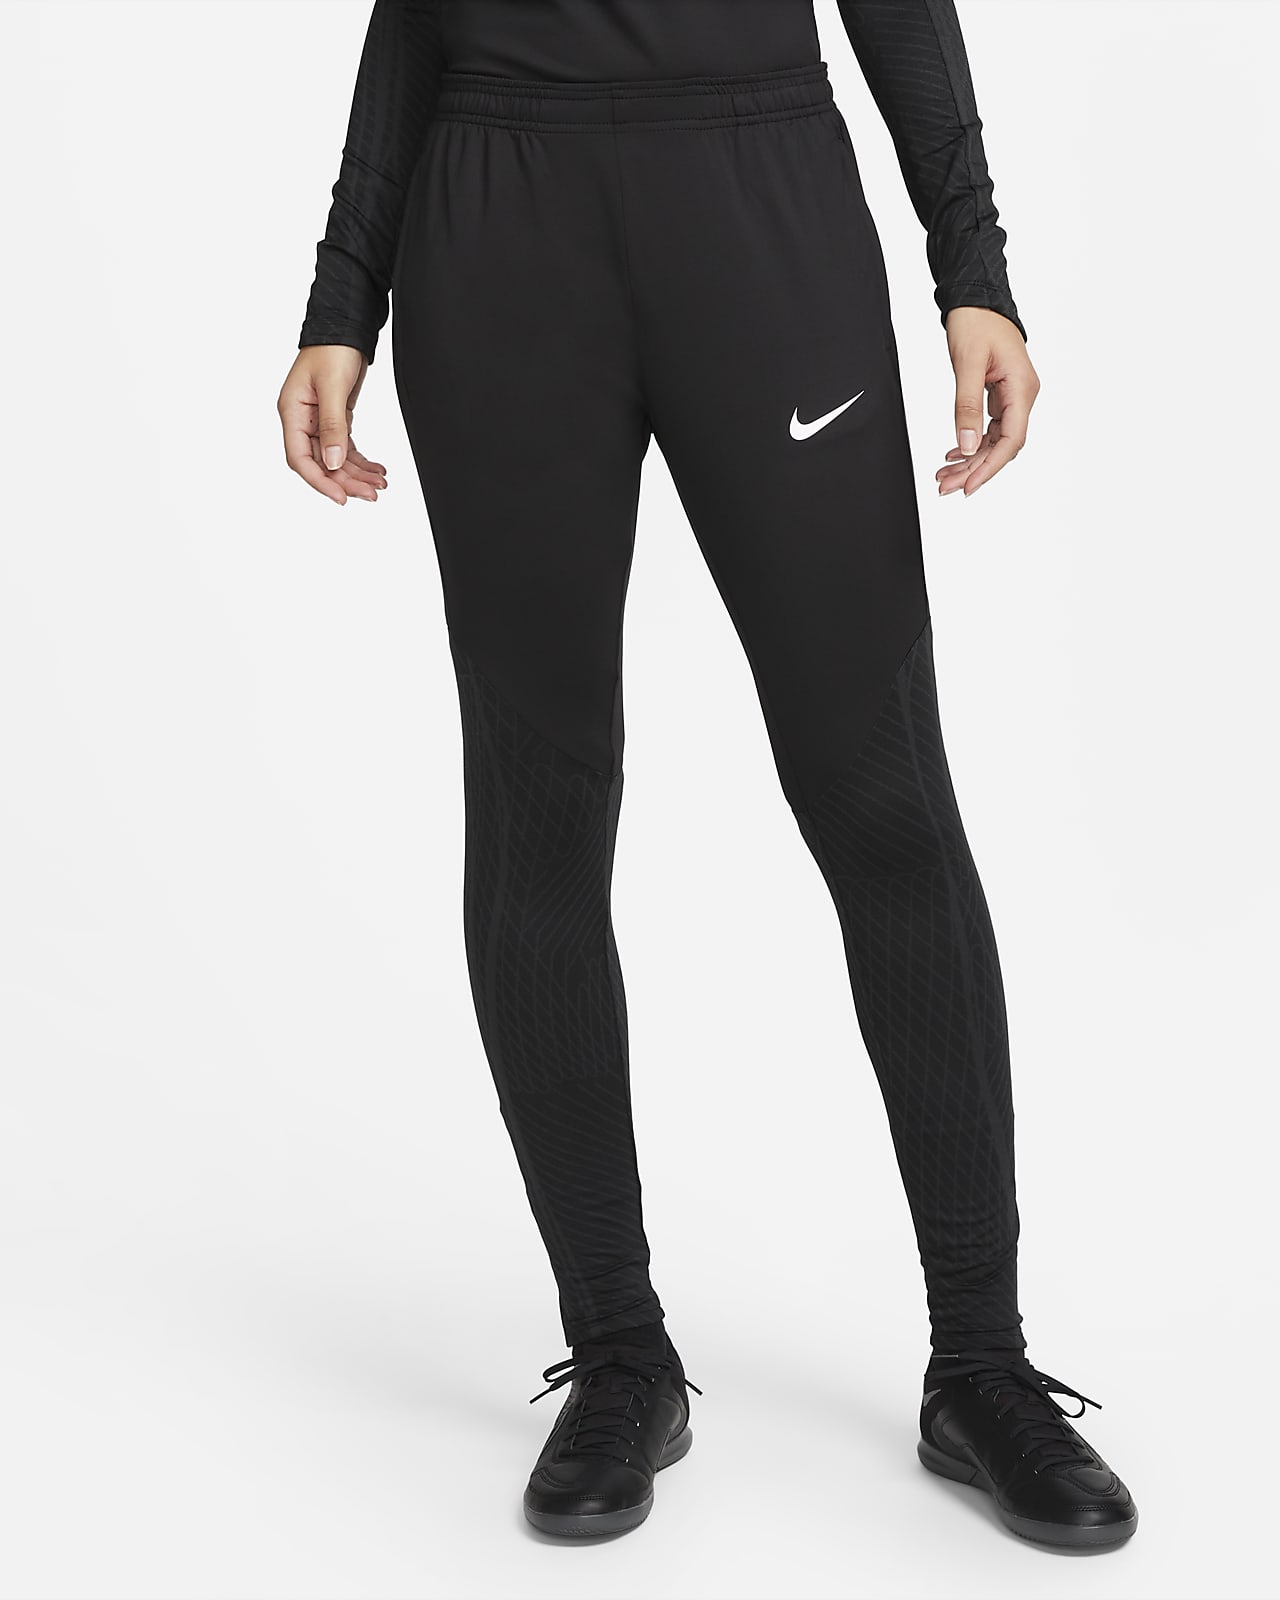 Jogging femme Nike Dri-Fit Academy - Nike - Pantalons d